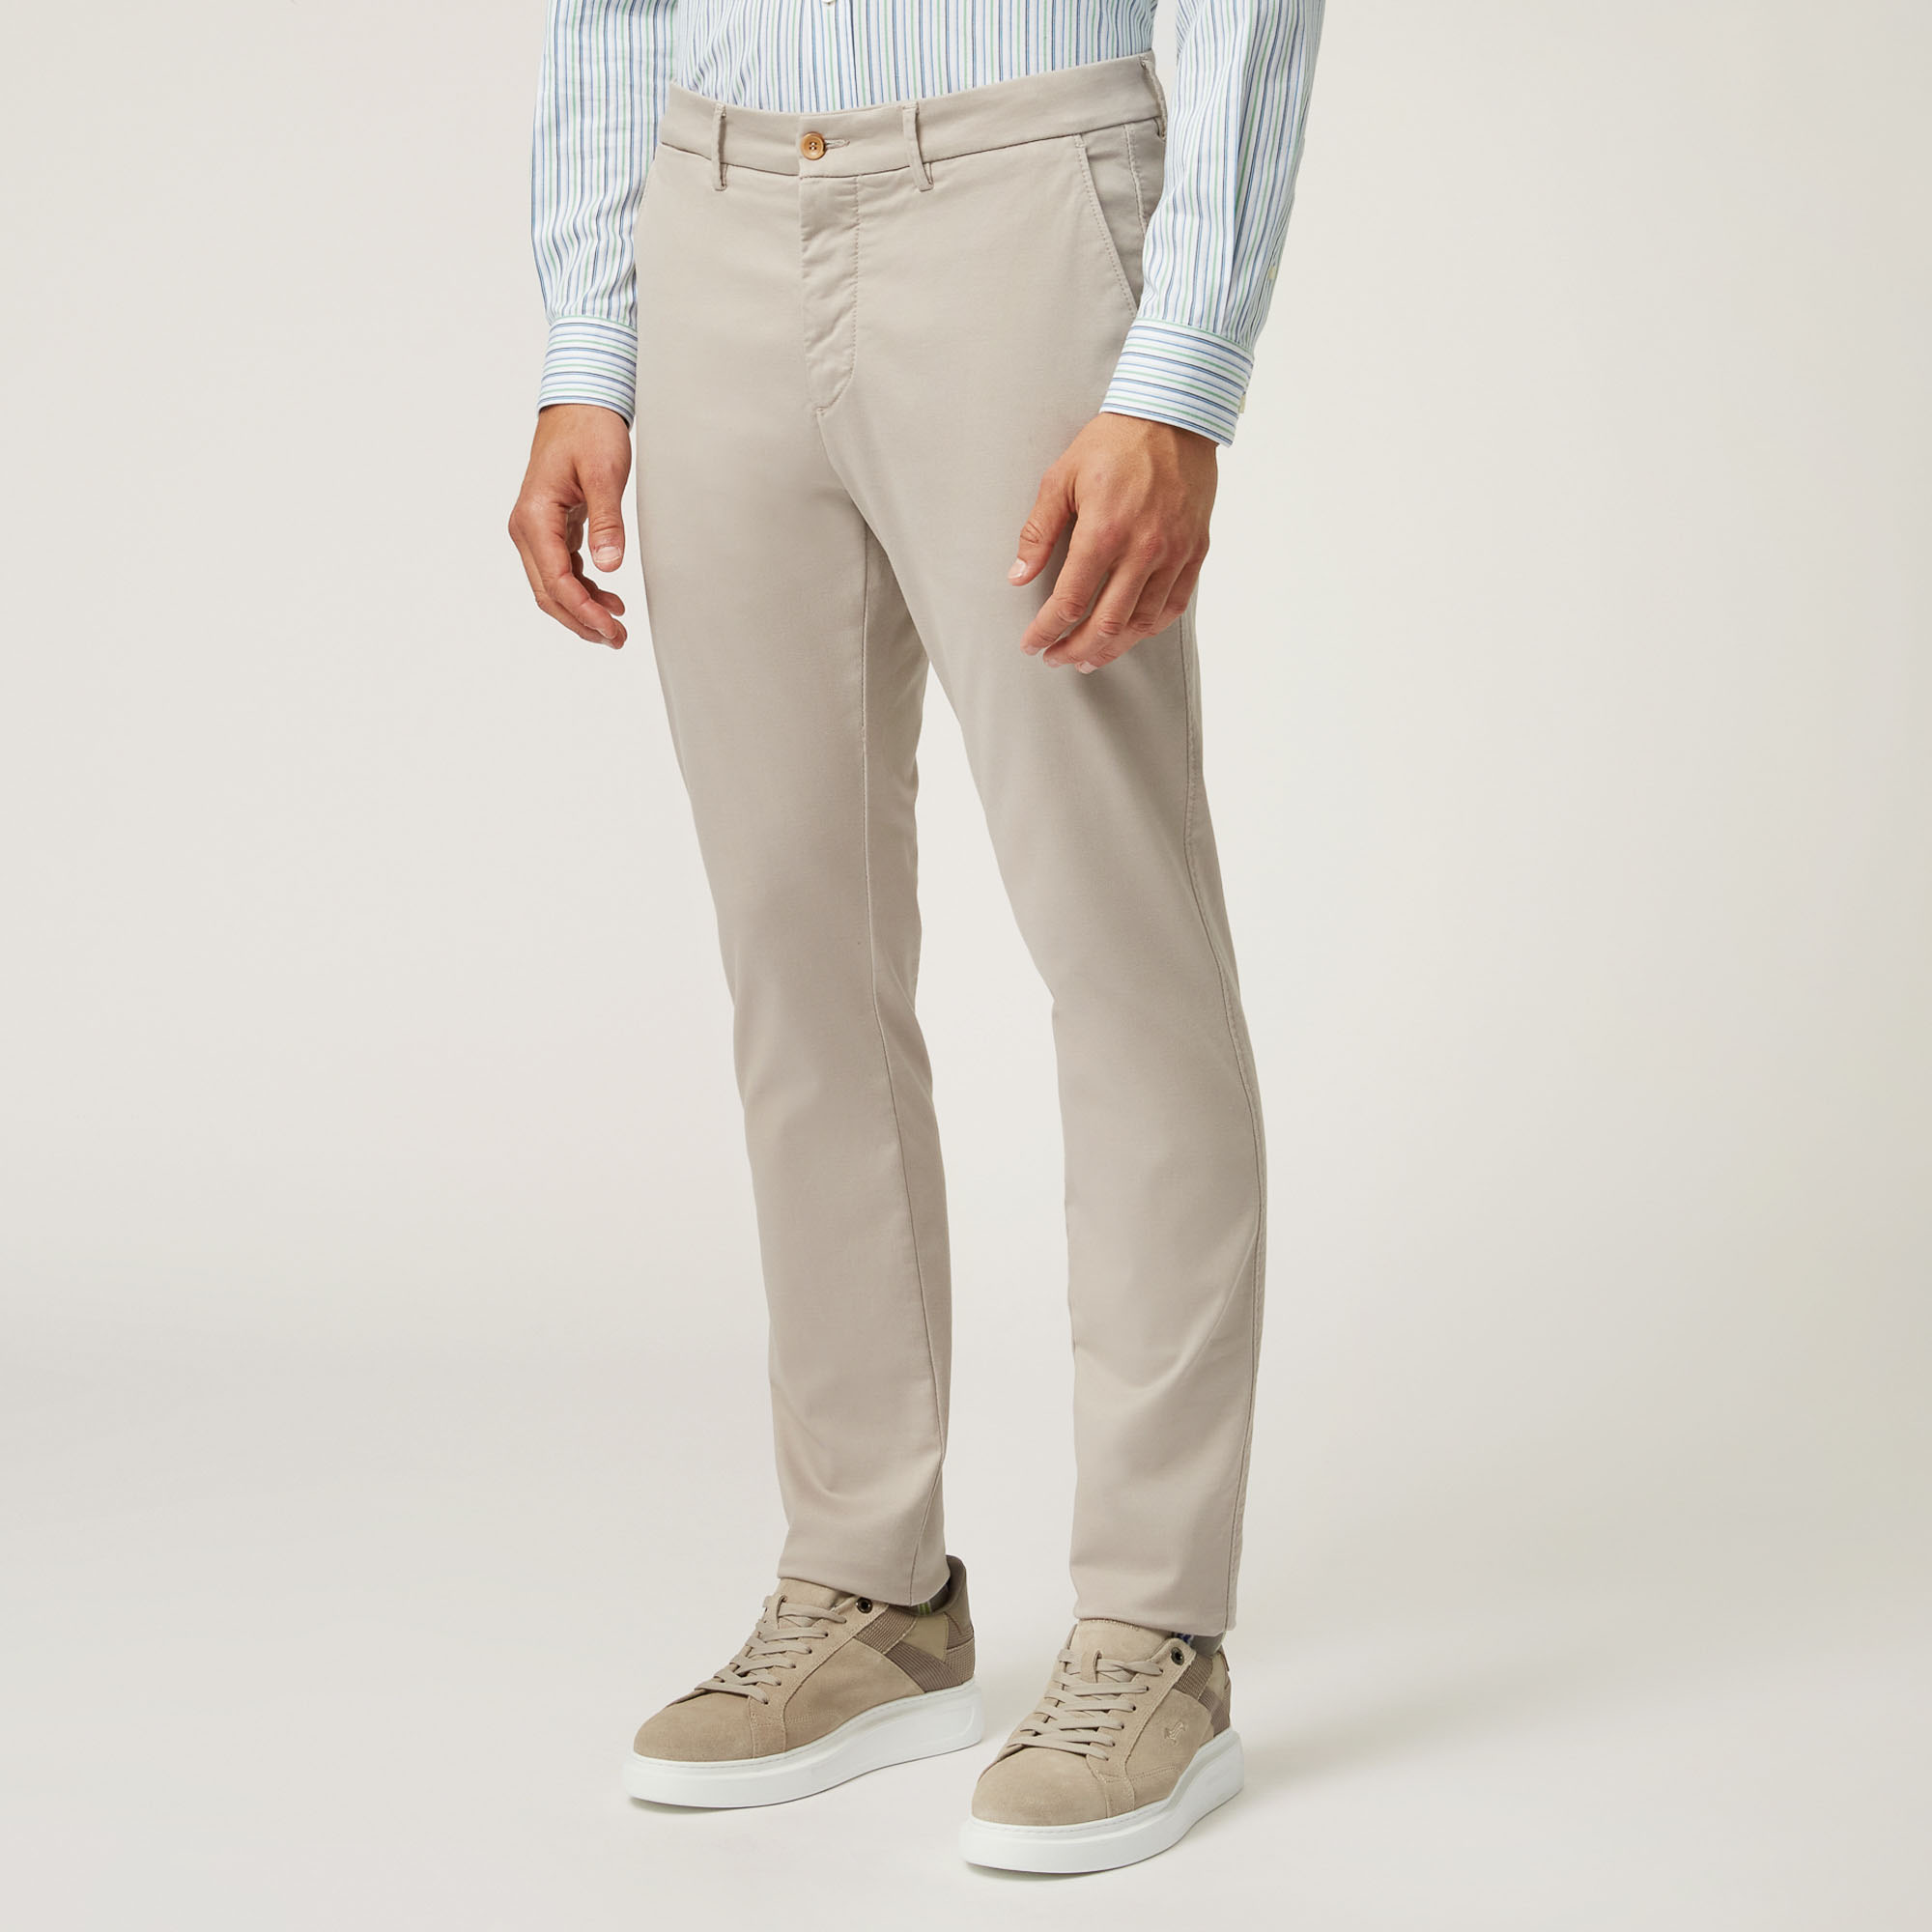 Pantalone Chino Narrow Fit In Tessuto Coolmax, Beige, large